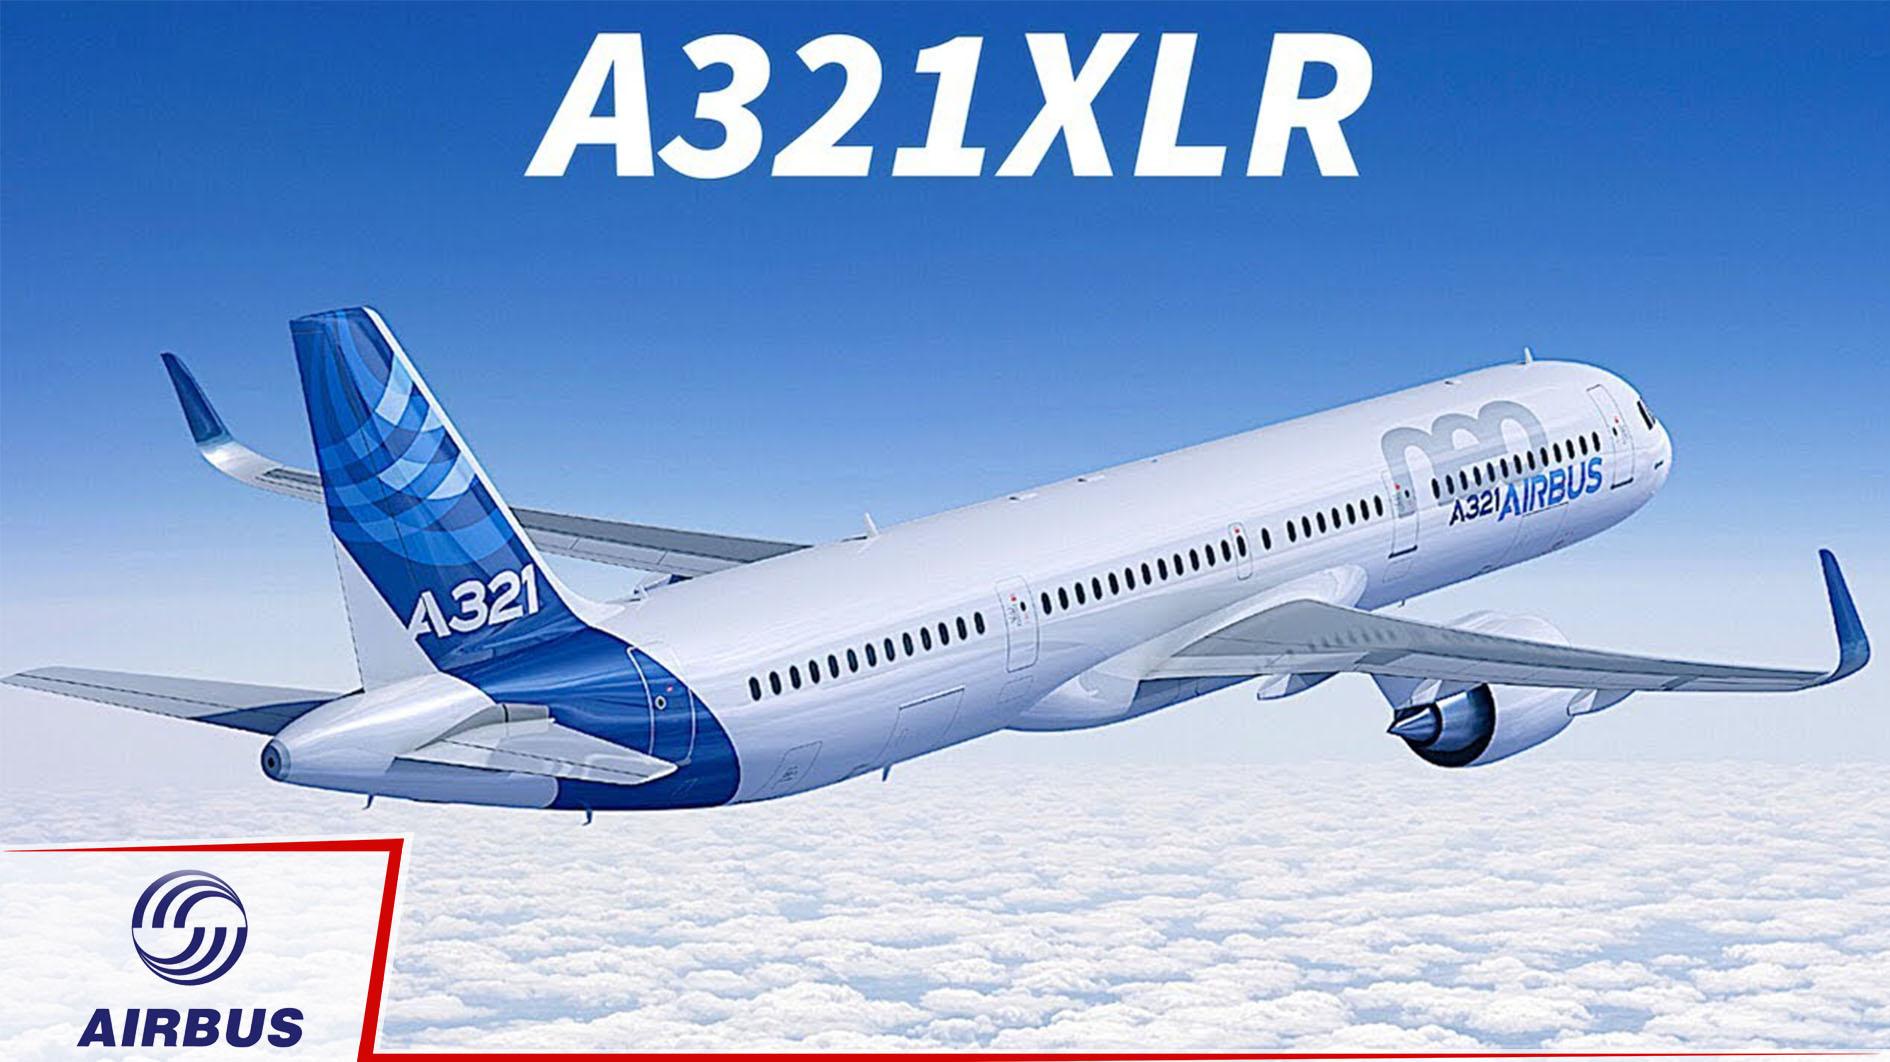 Airbus'ın yeni yolcu uçağı A321 XLR, yüzlerce sipariş aldı